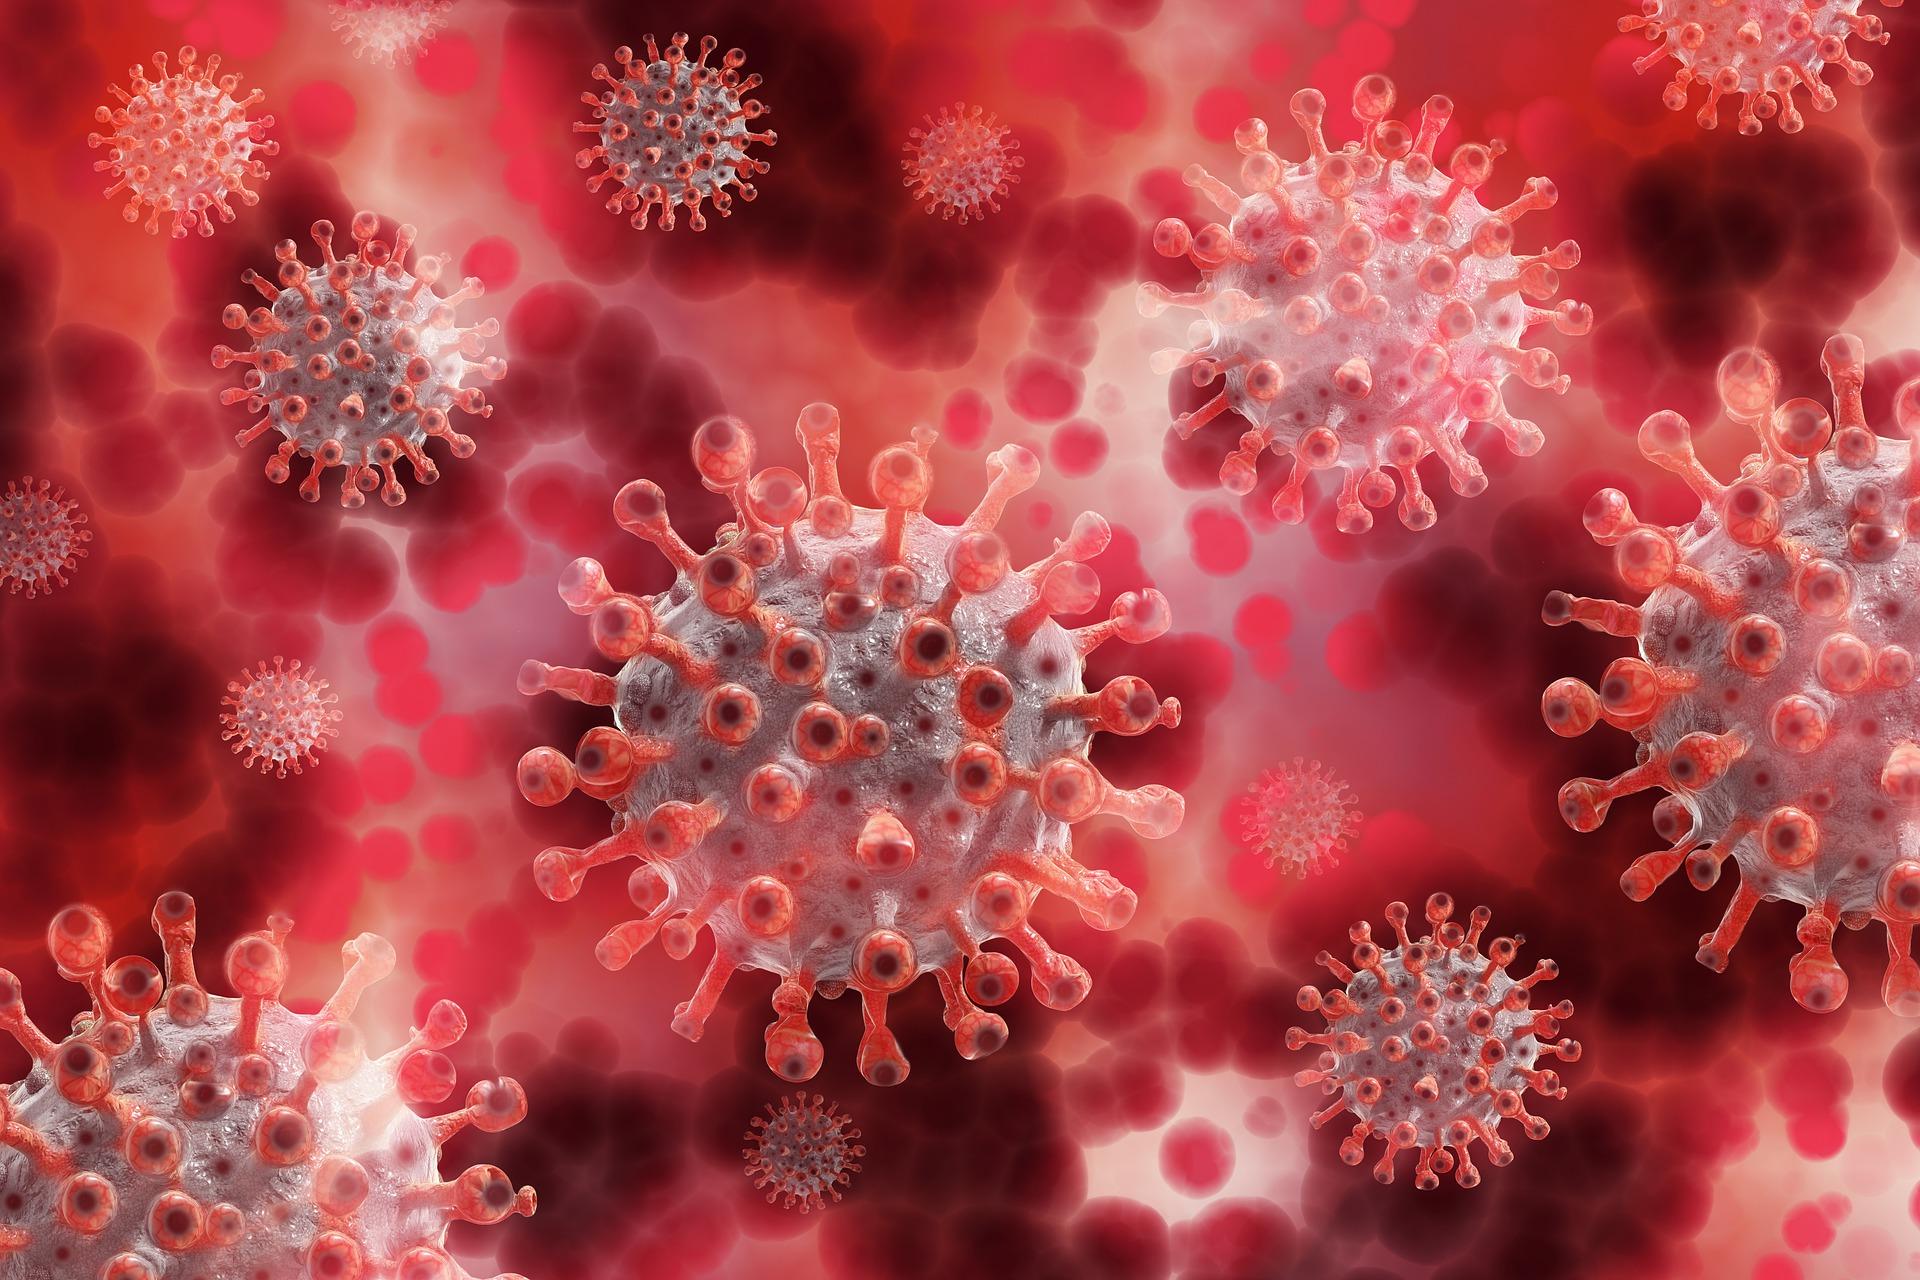 Image of (up close) pink corona virus 